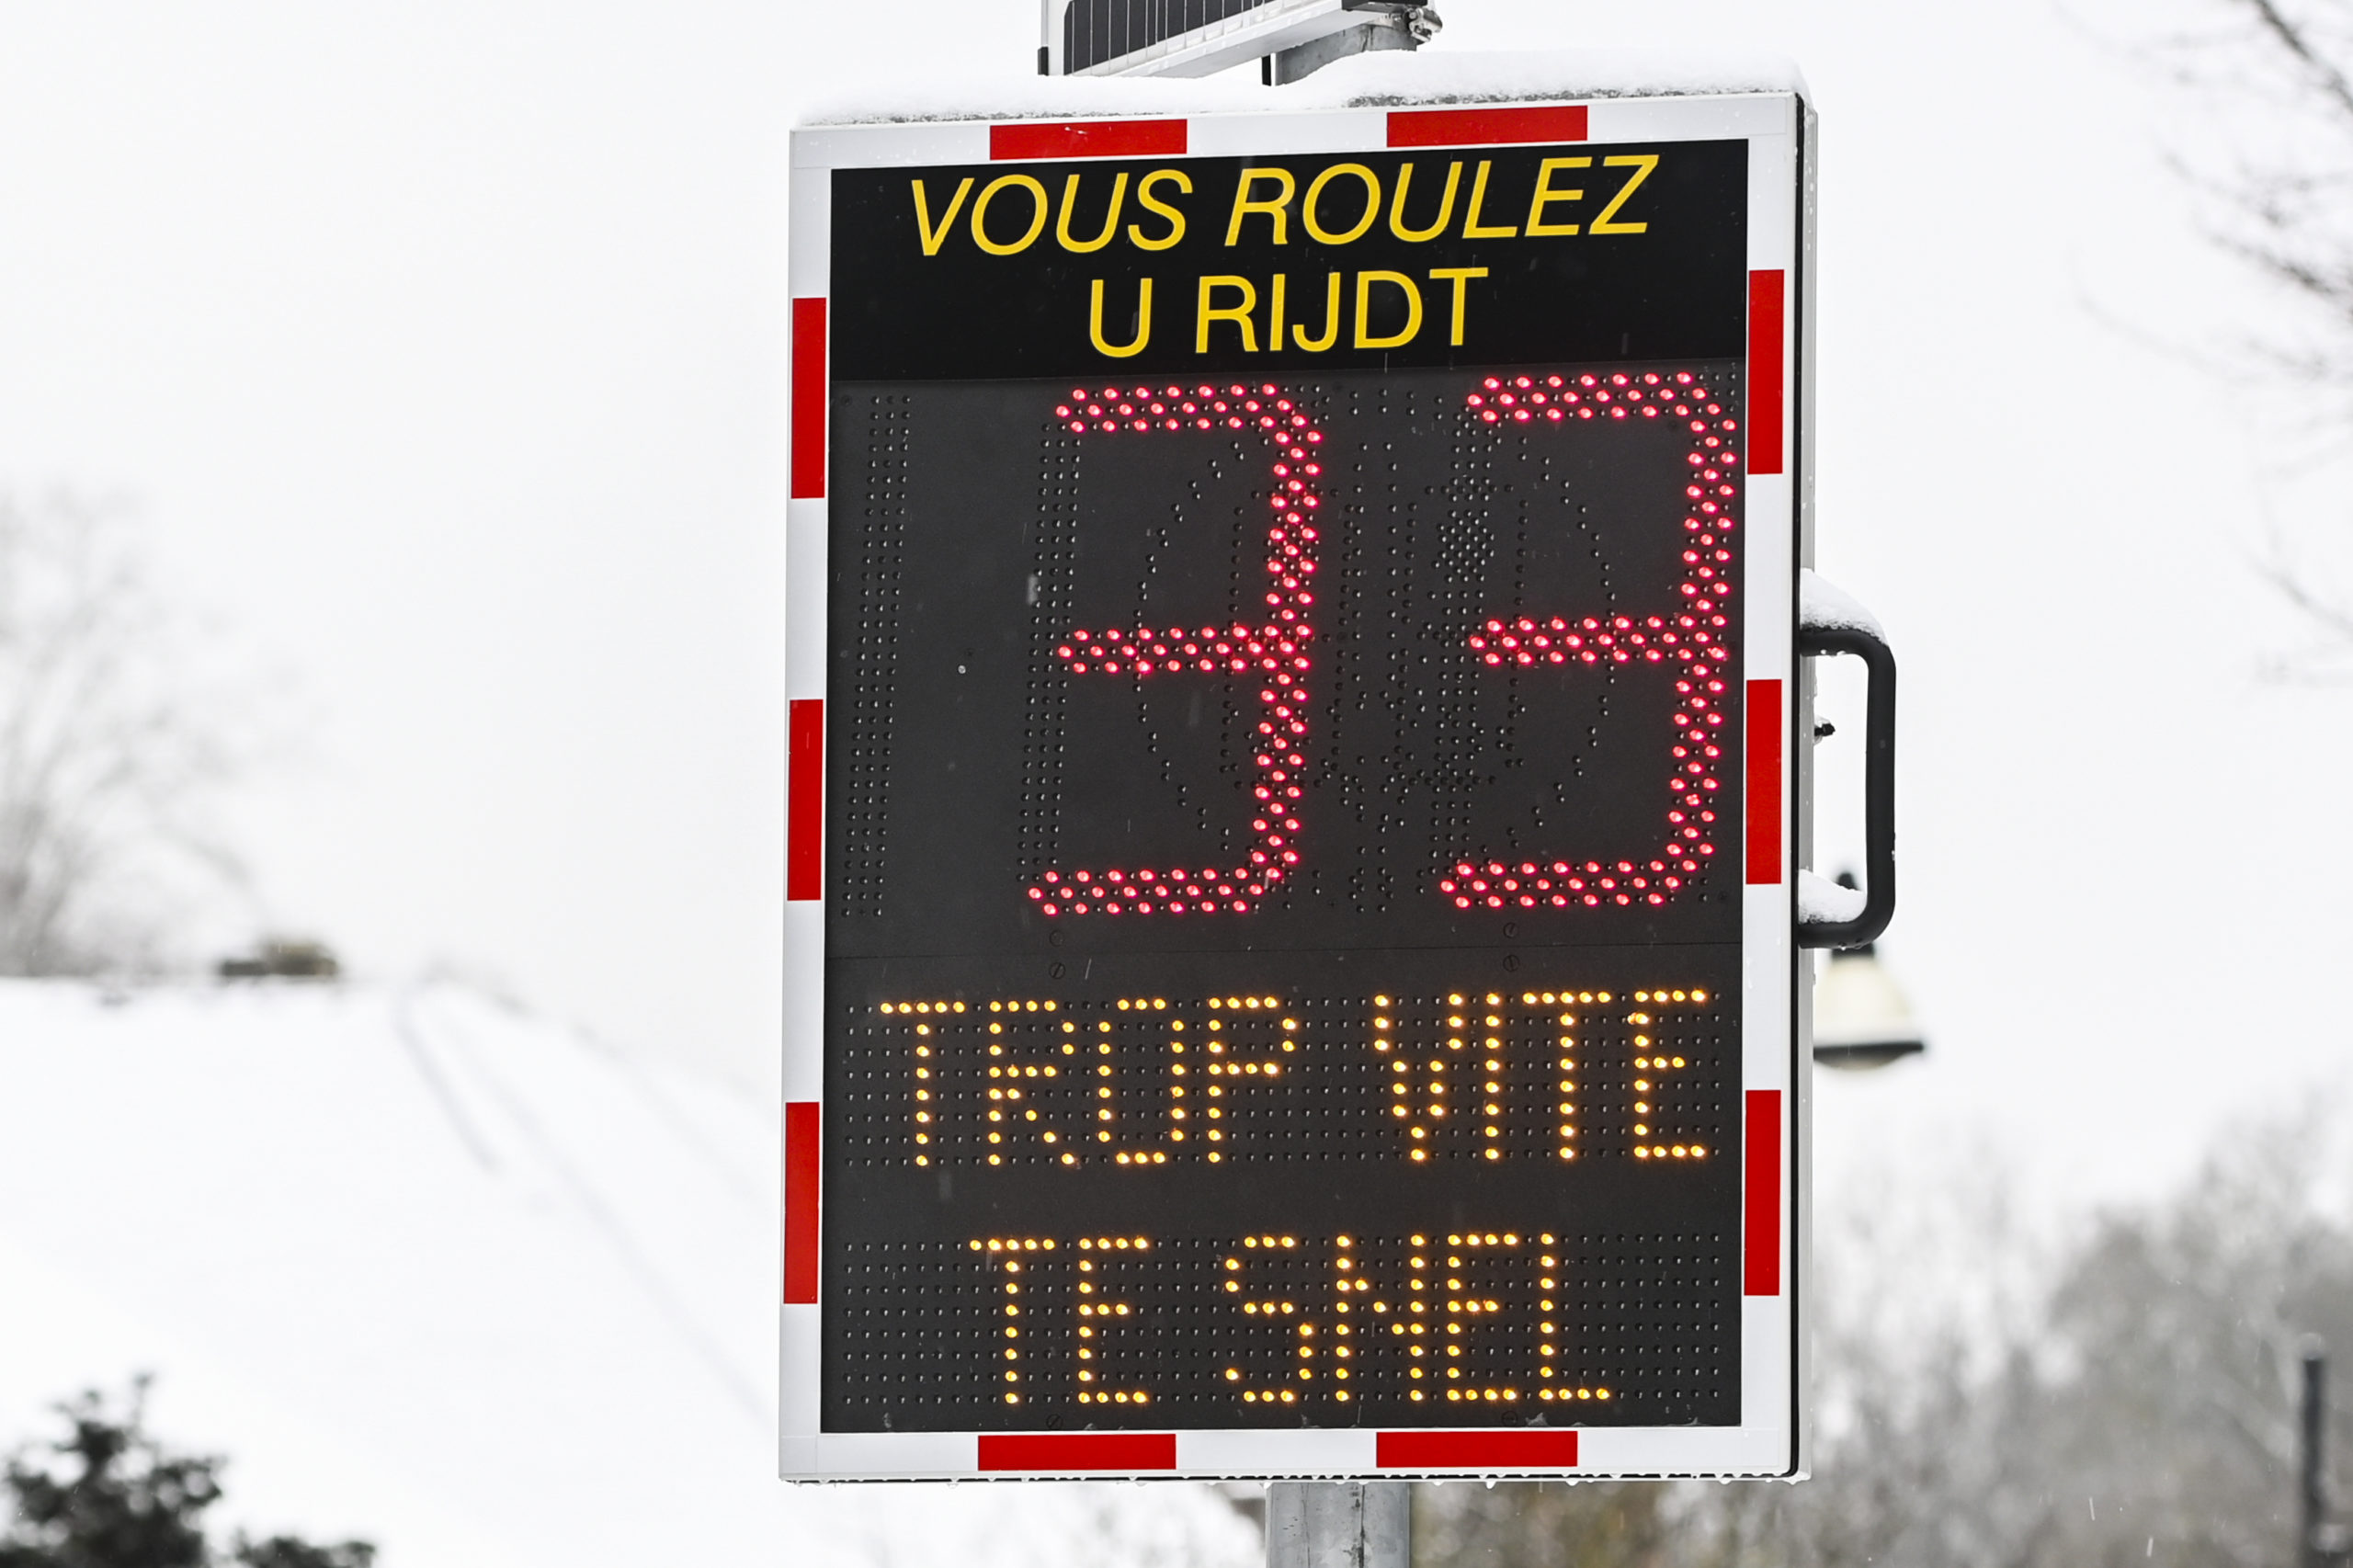 Belgians disregard traffic rules most of 11 EU countries